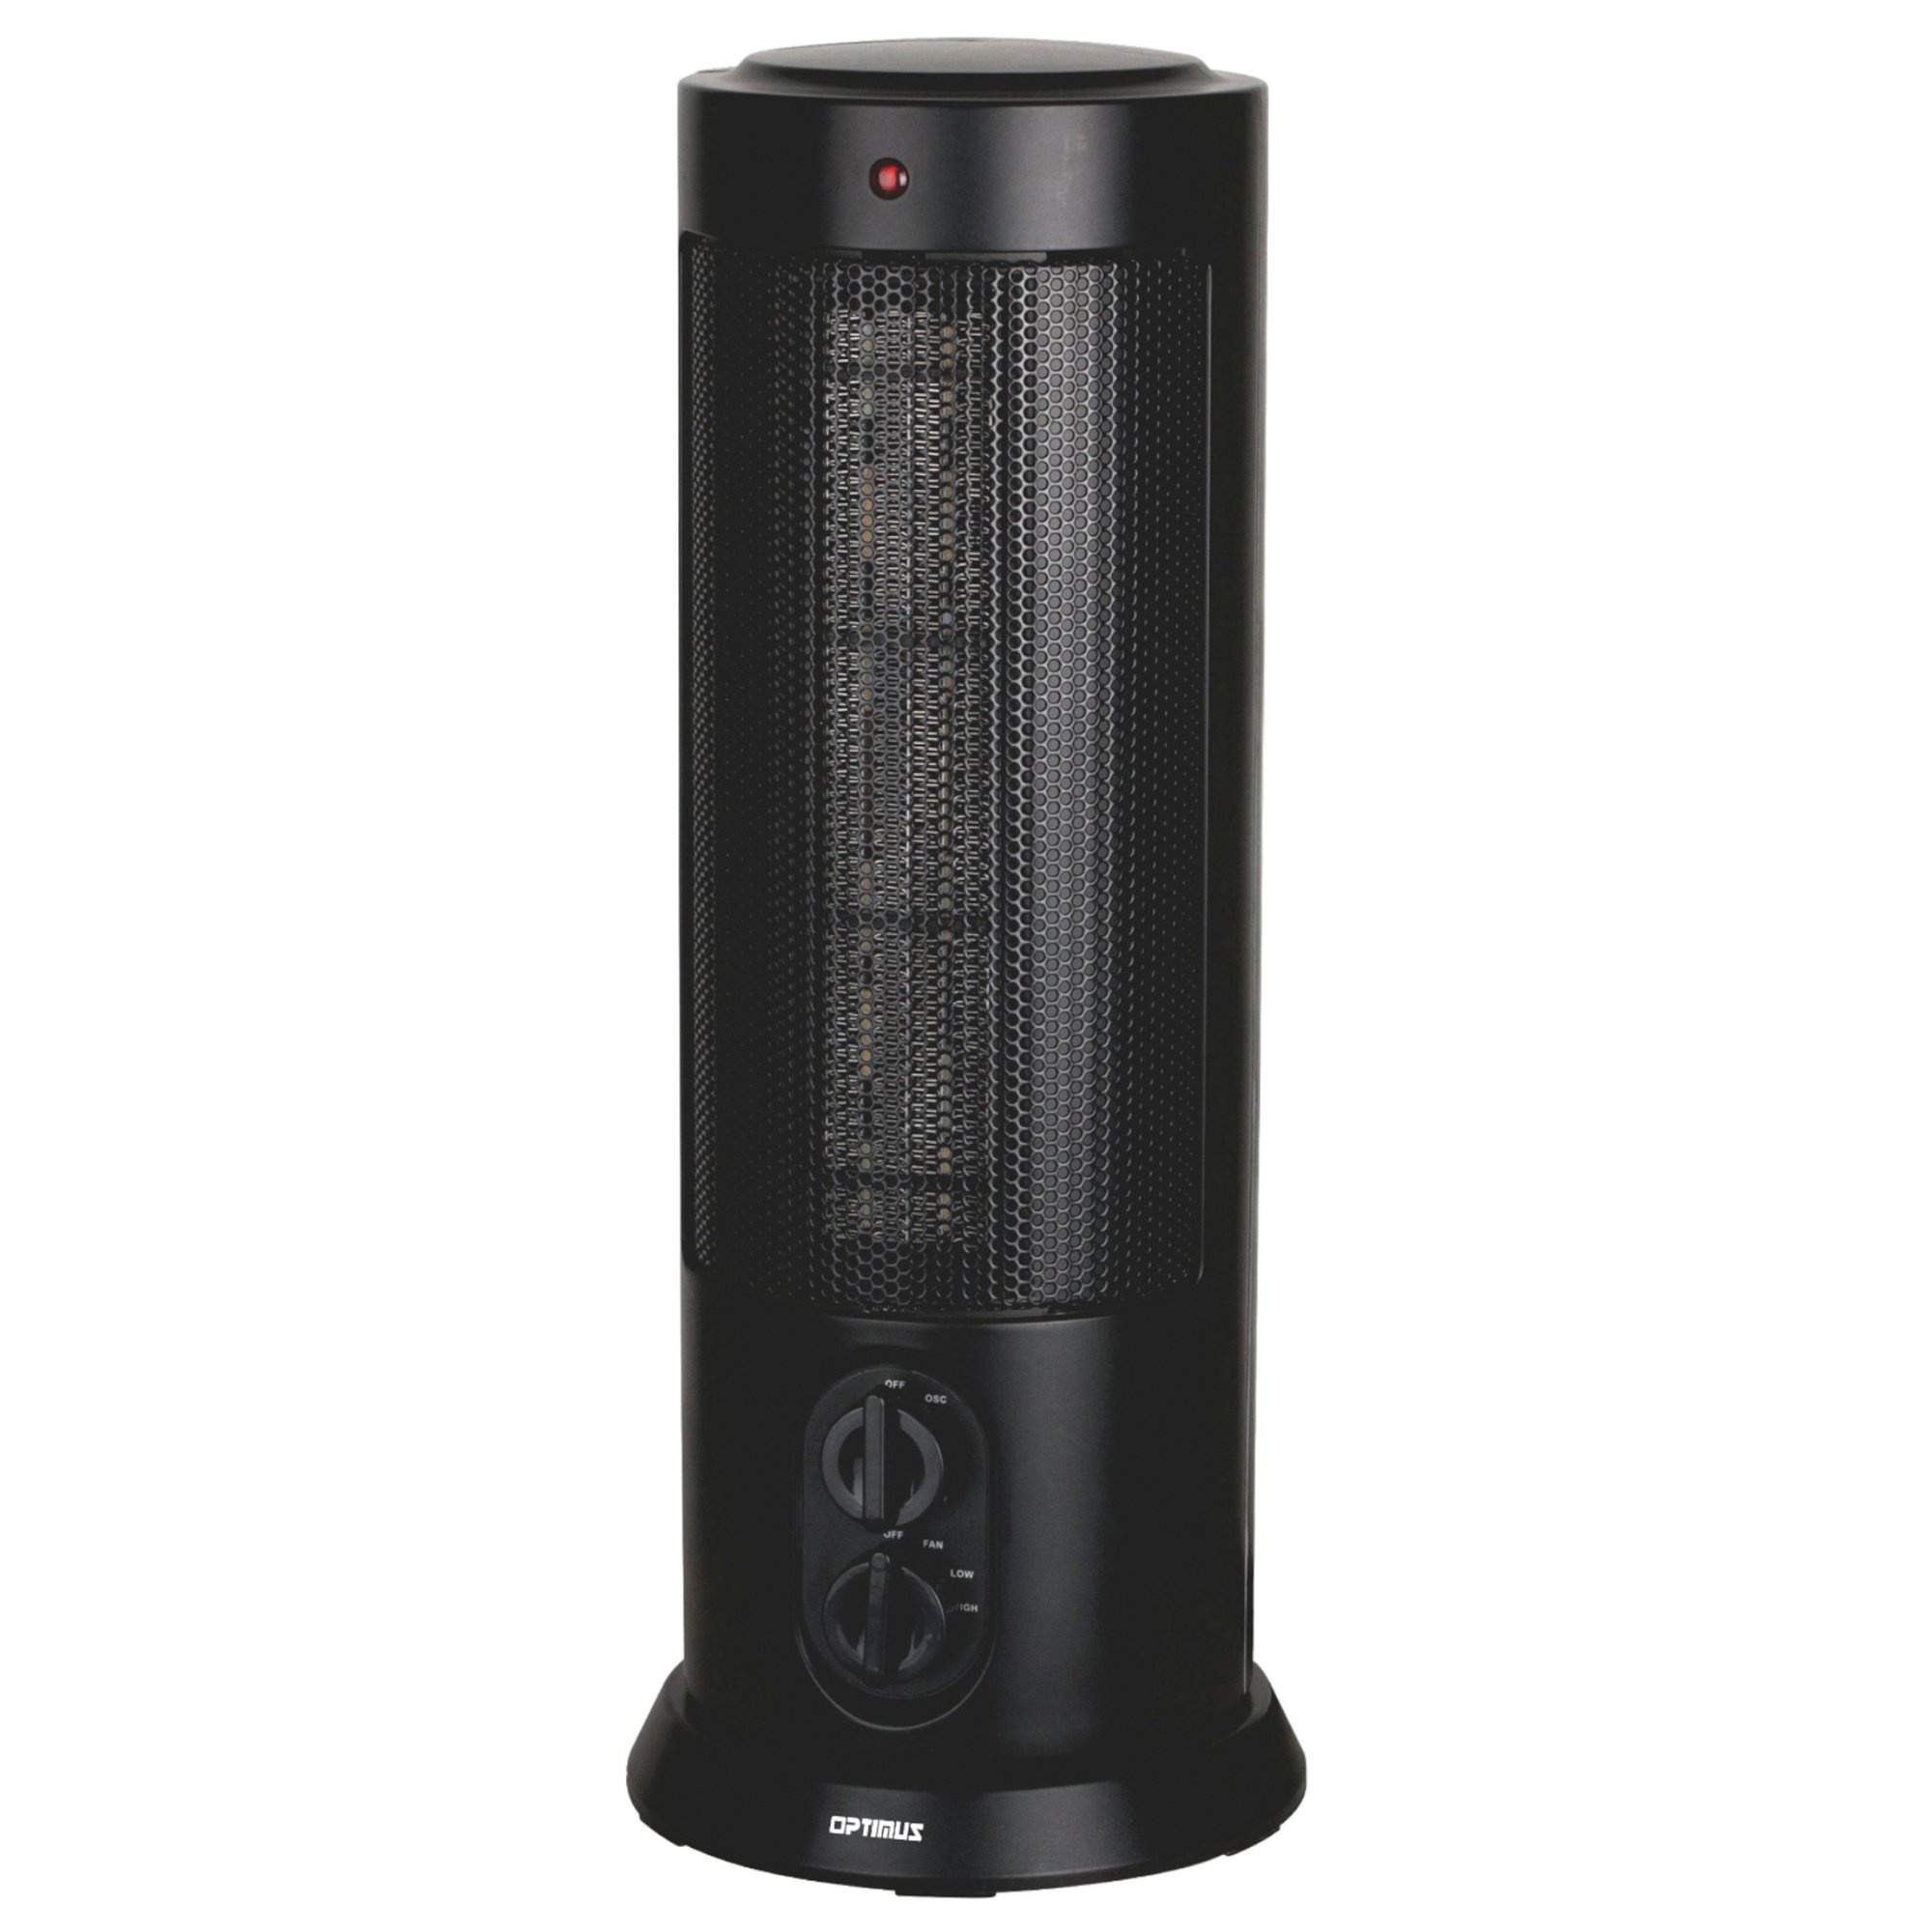 OPTIMUS H-7234 18-Inch 750-Watt/1,500-Watt Oscillating Ceramic Tower Heater with Thermostat